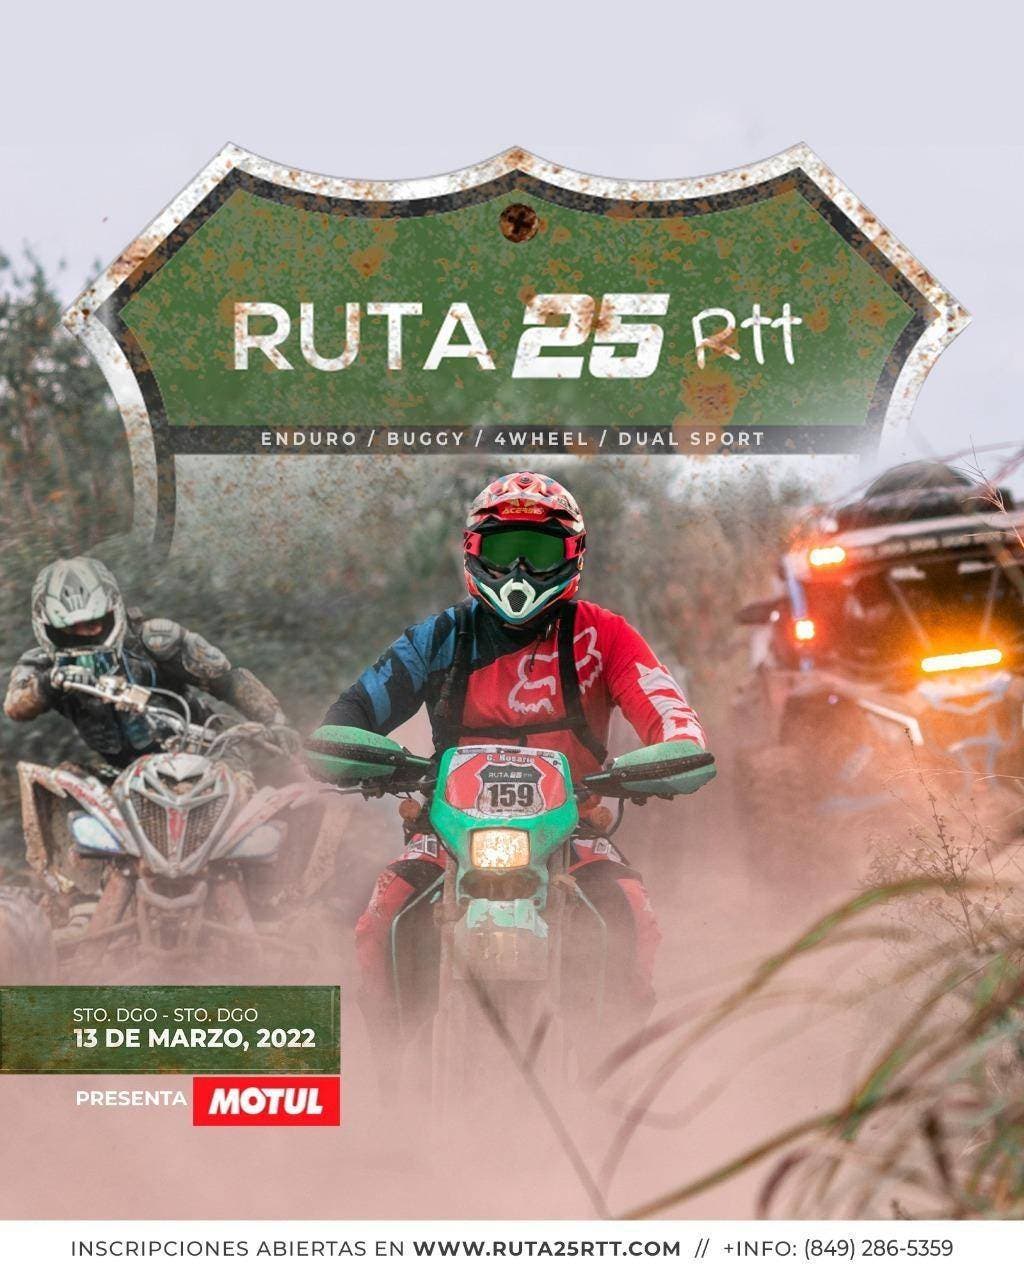 Evento Rally “Ruta25 Rtt 2022” arranca el próximo domingo